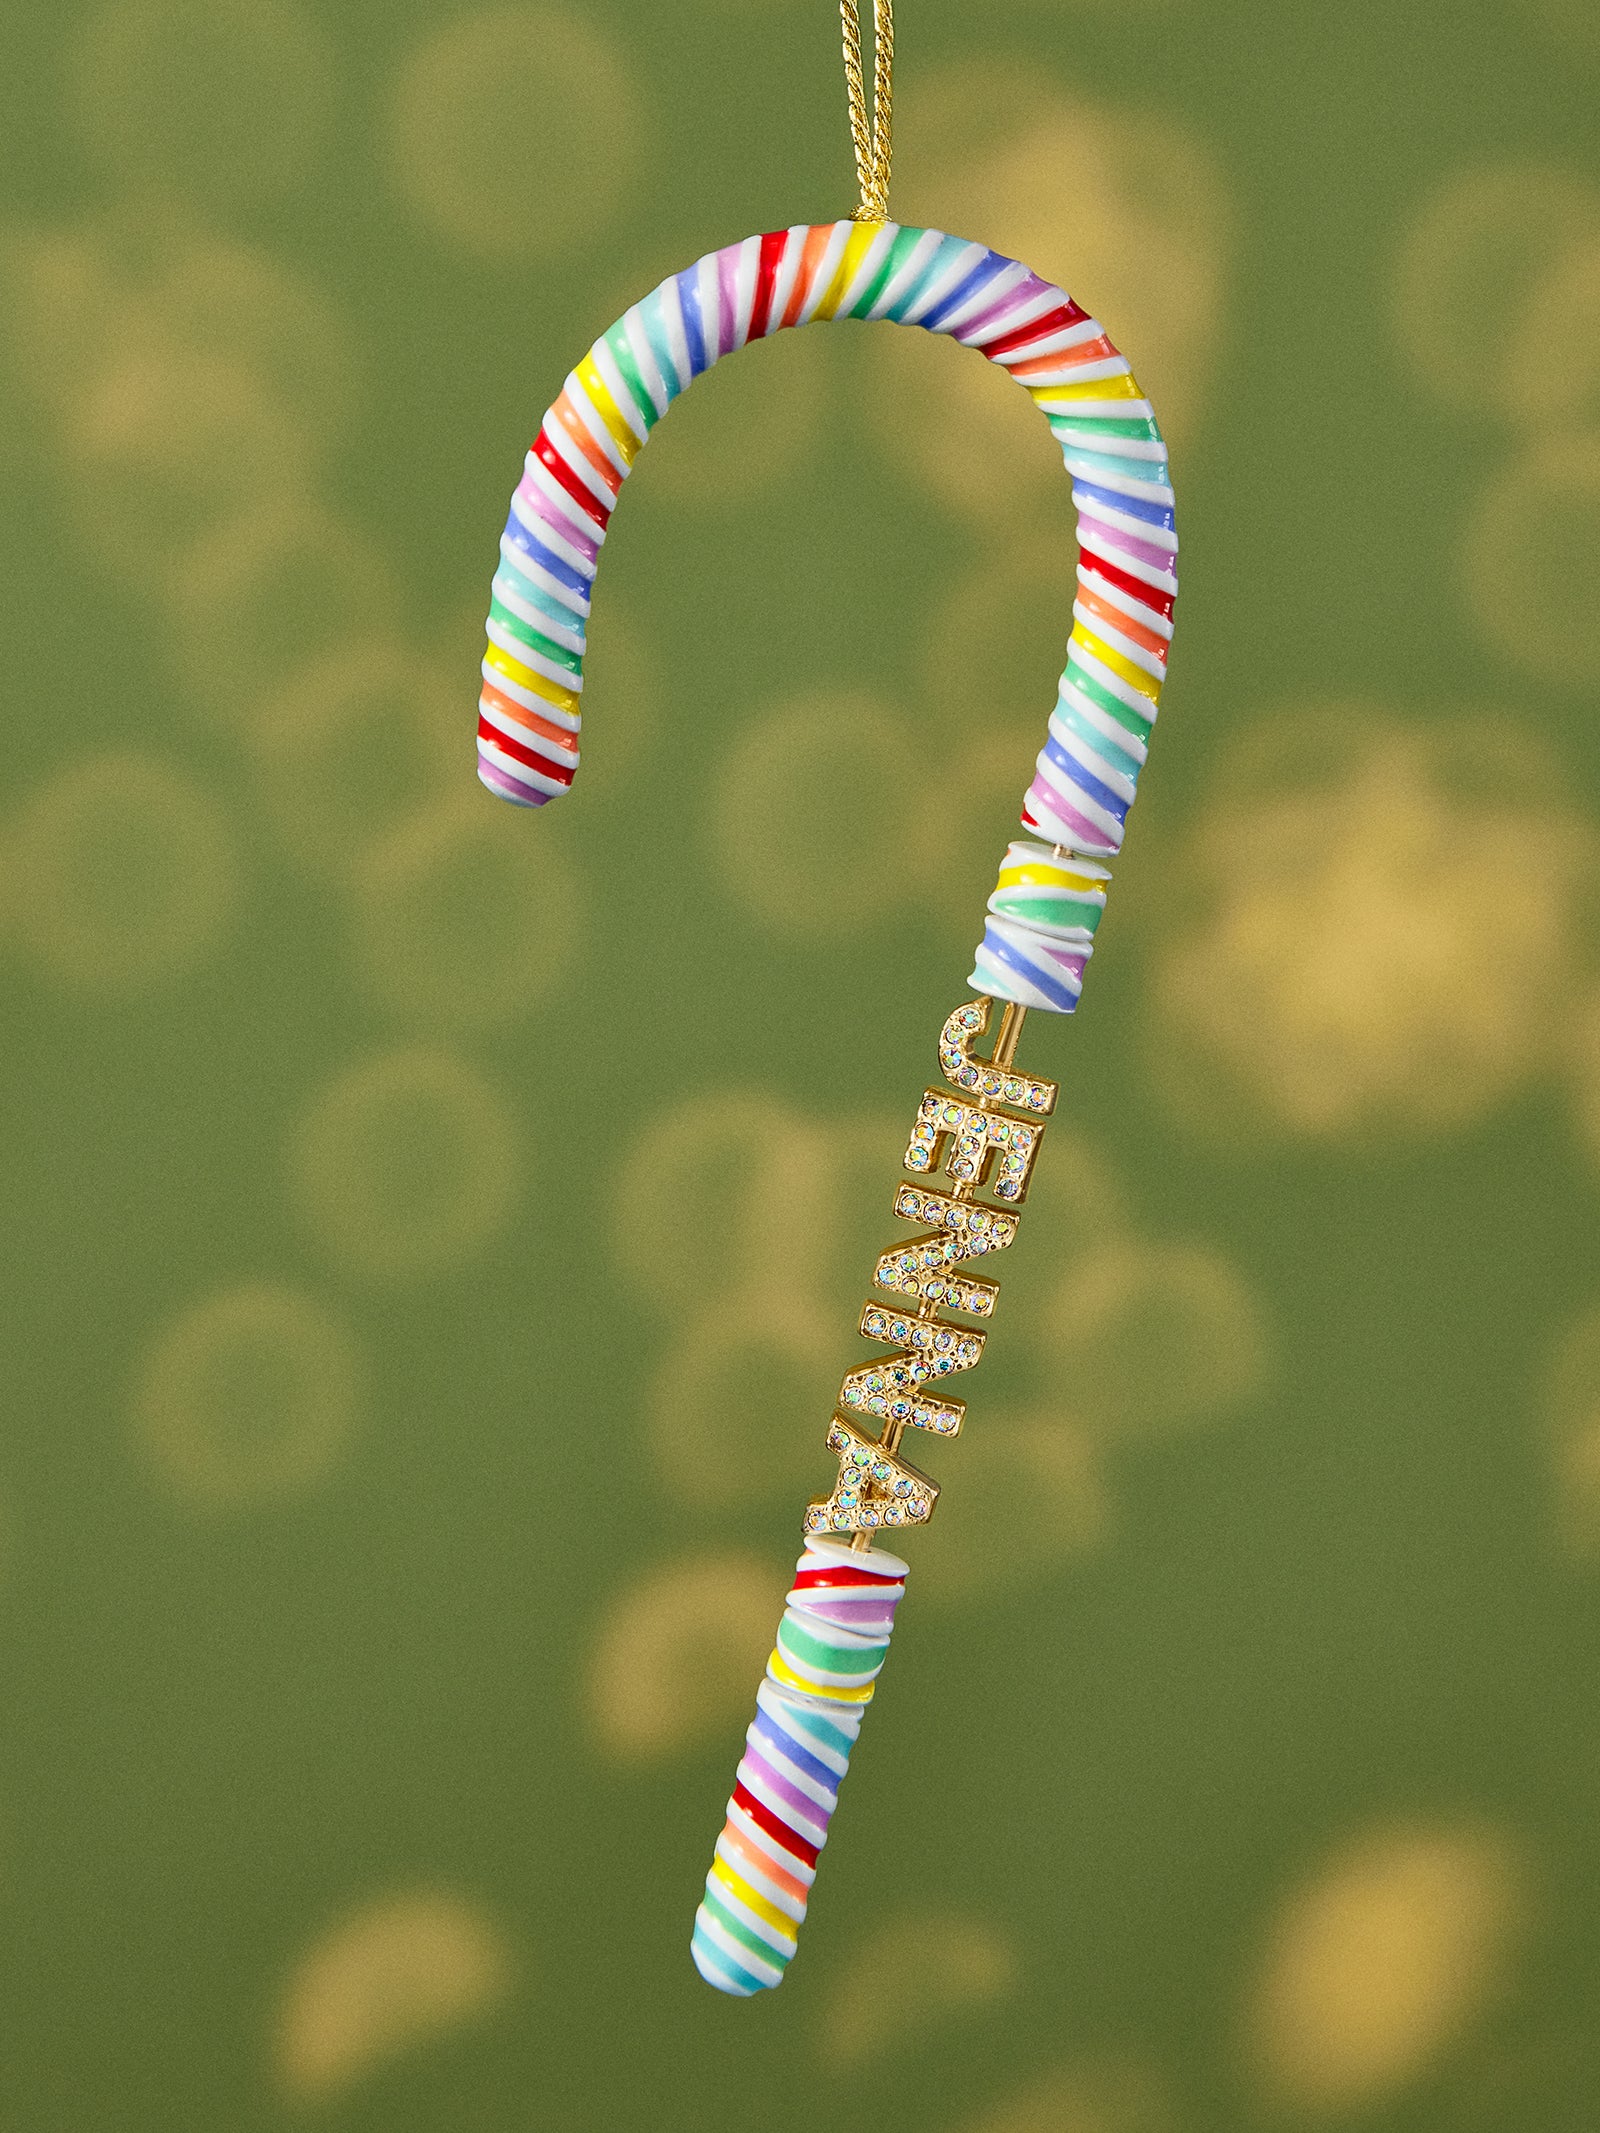 Promotional Customized Blinky Candy Cane Headband